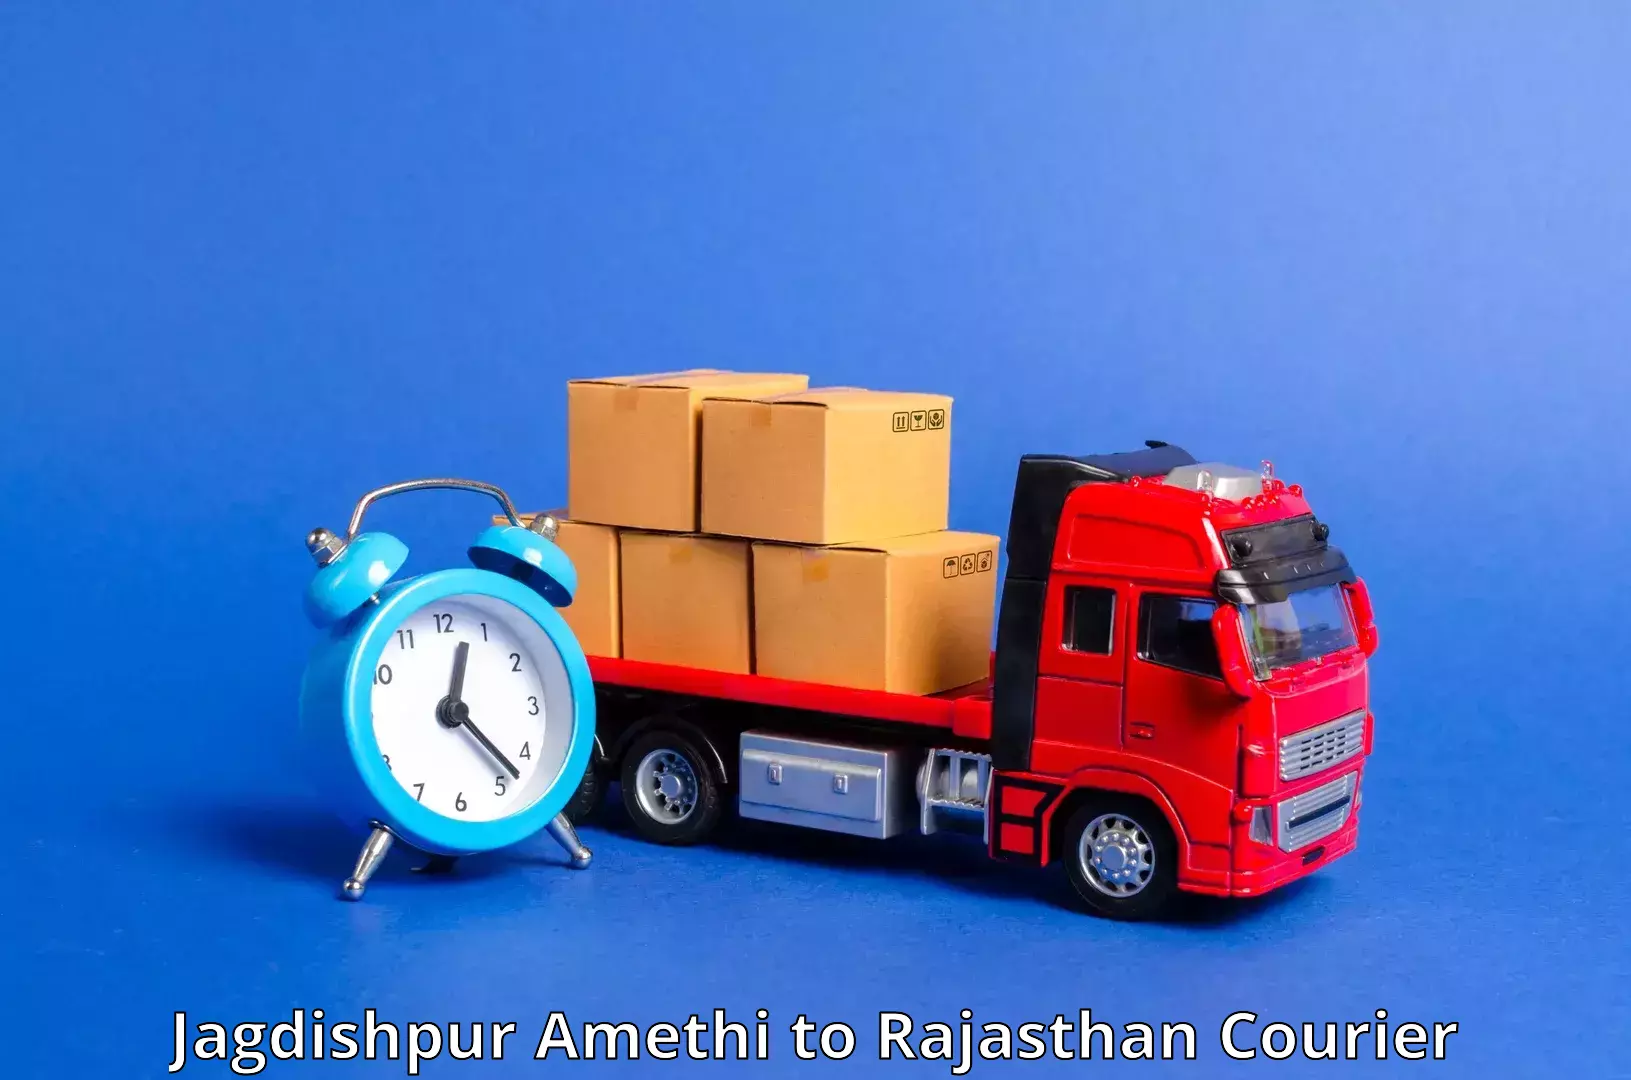 Express mail service Jagdishpur Amethi to Tibbi